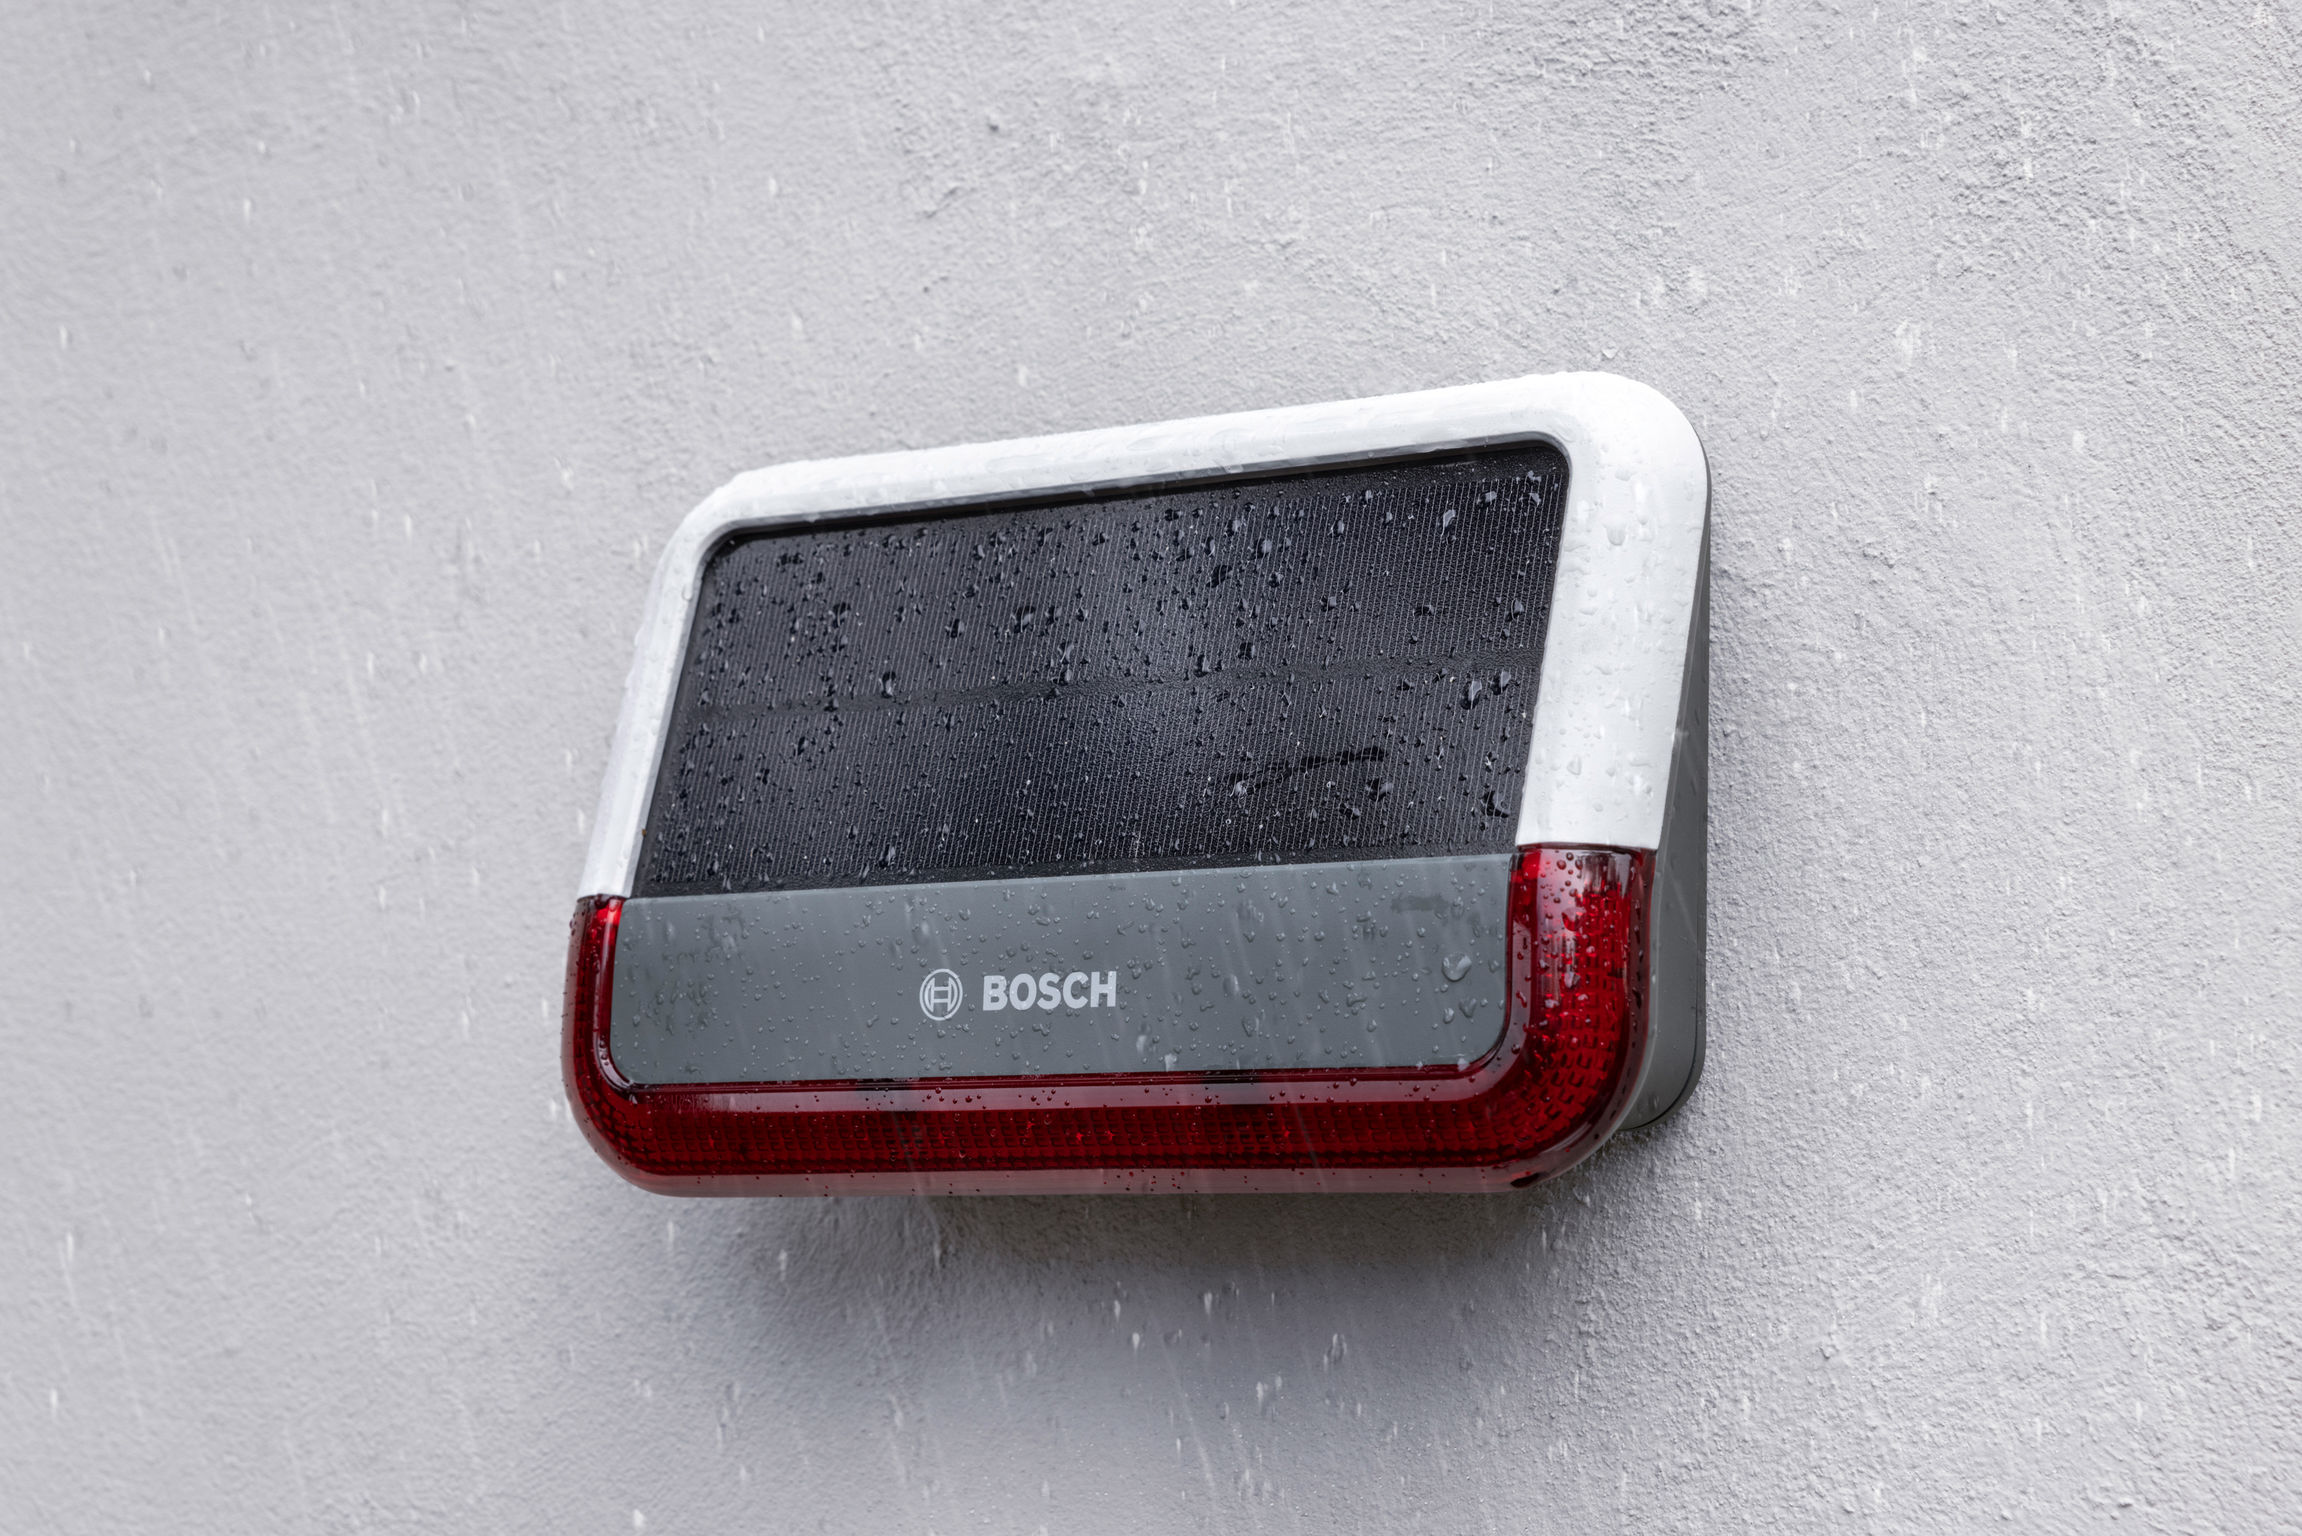 Bosch Smart Home Outdoor Siren